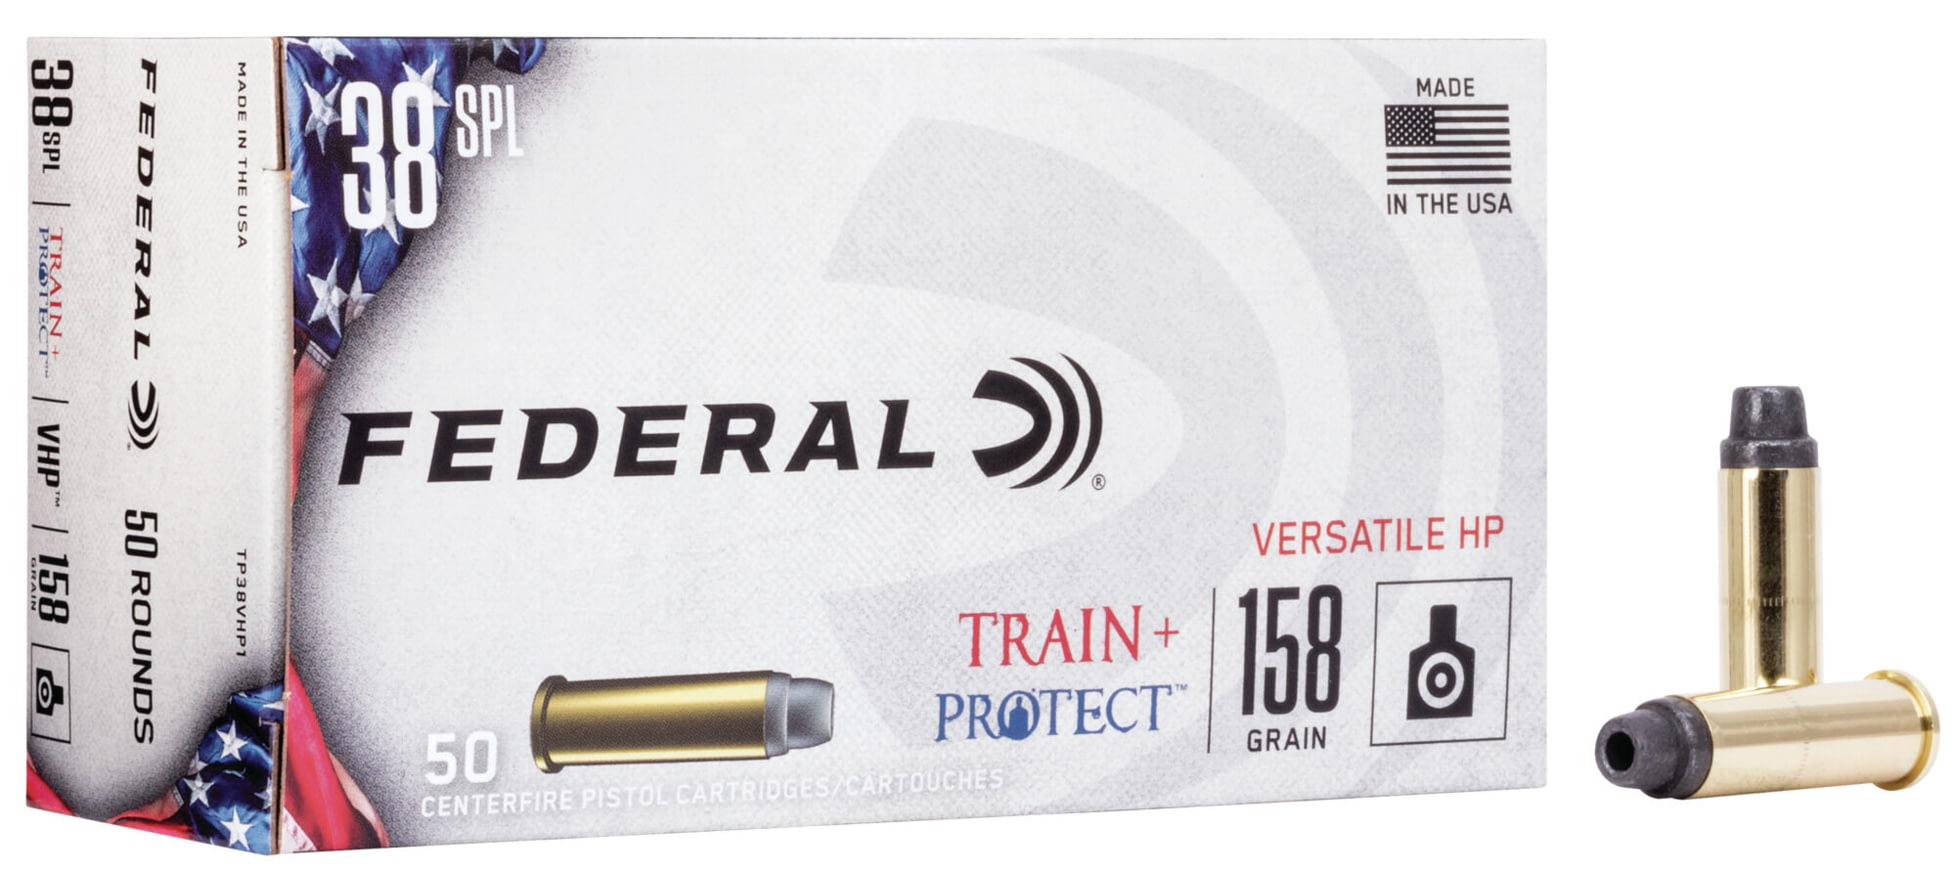 Federal Premium Centerfire Handgun Ammunition .38 Special 158 grain Versatile Hollow Point Centerfire Pistol Ammunition